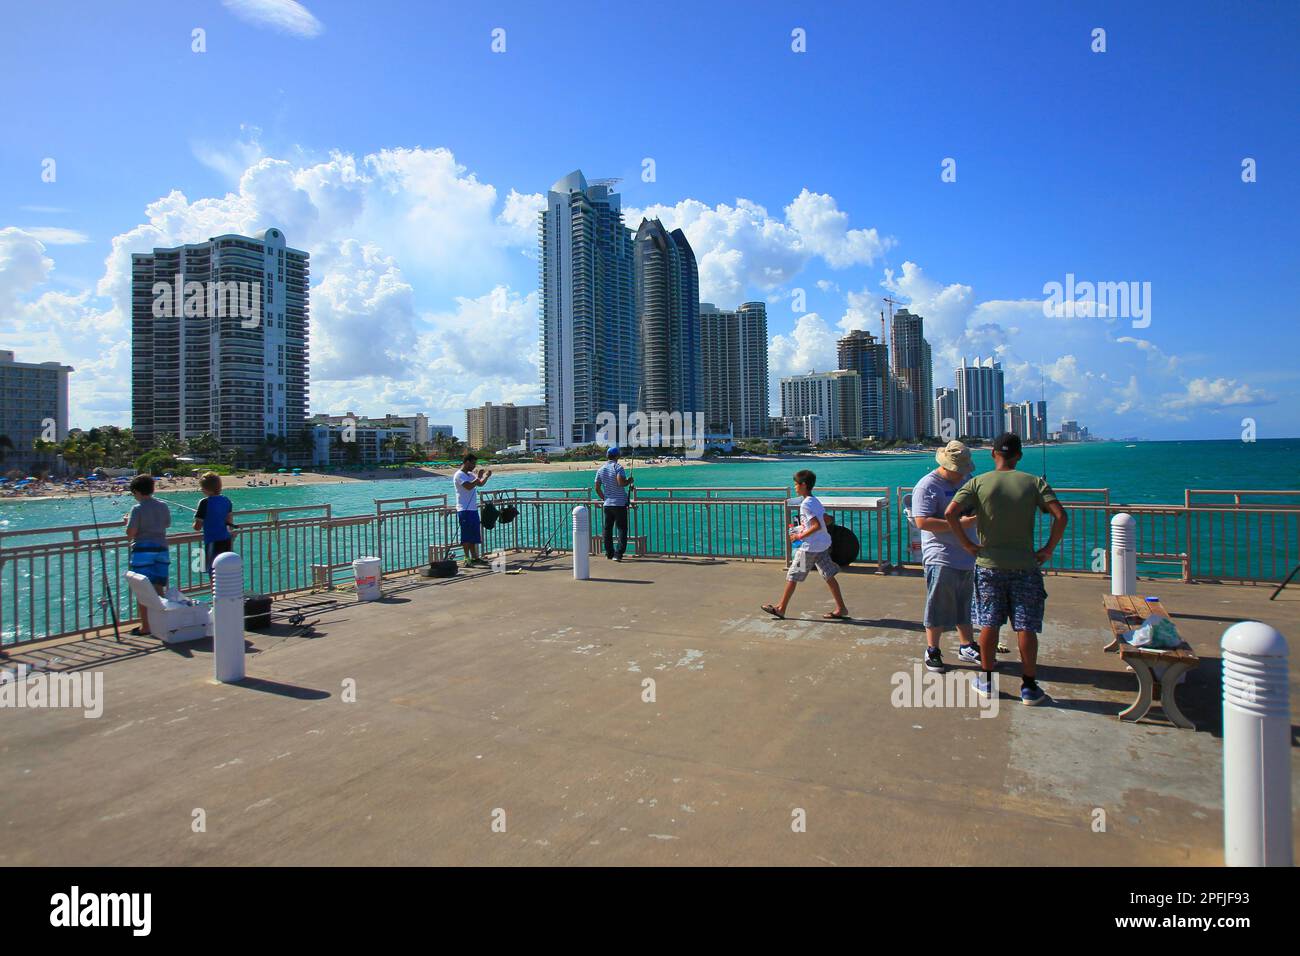 Sunny Isles, Miami FL. Tourist are seen in the dock of Sunny Isles. Photo by: José Bula Stock Photo